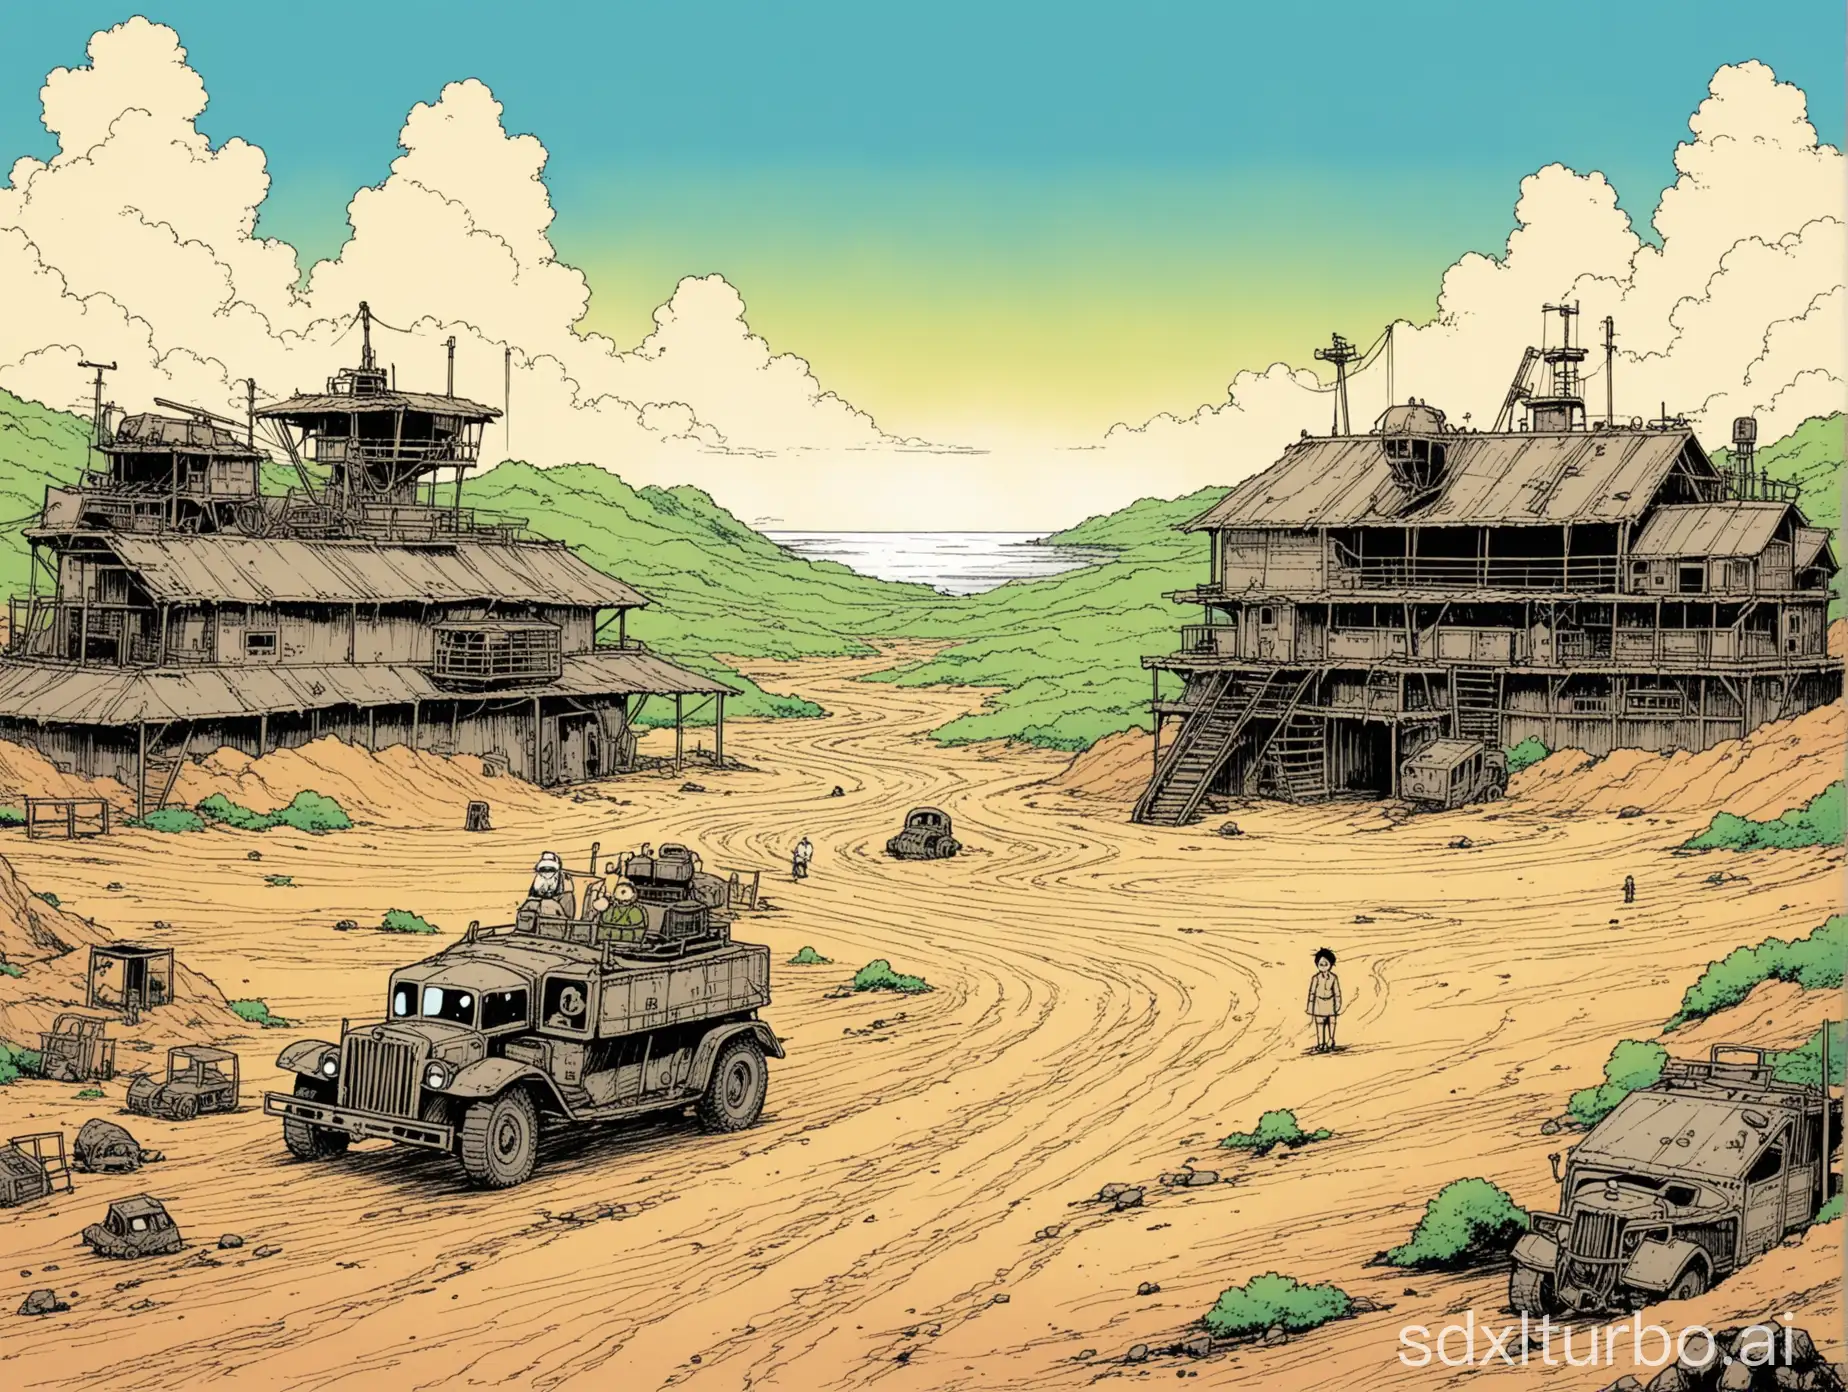 Wasteland-Entertainment-Space-Manga-Hayao-MiyazakiInspired-Artwork